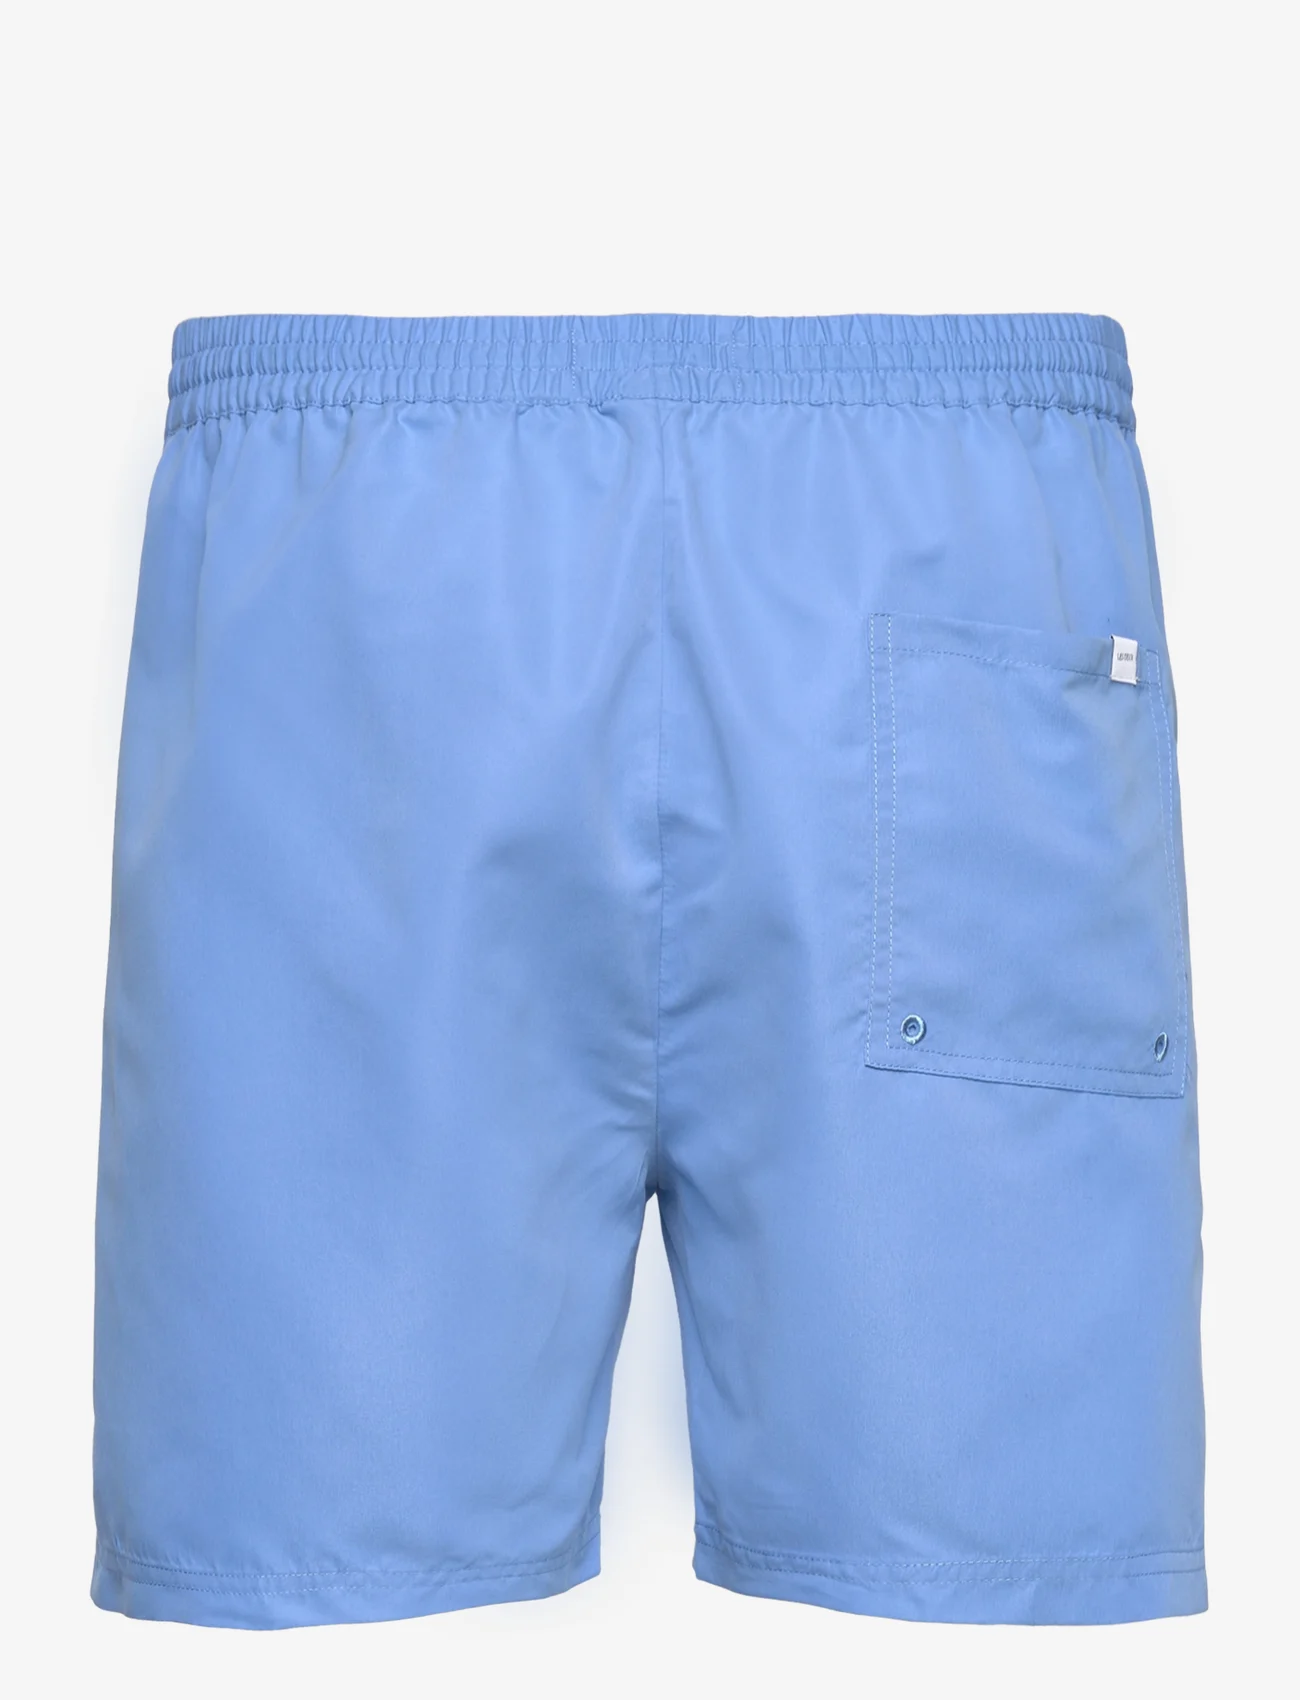 Les Deux - Les Deux Logo Swim Shorts - män - washed denim blue/dark navy - 1